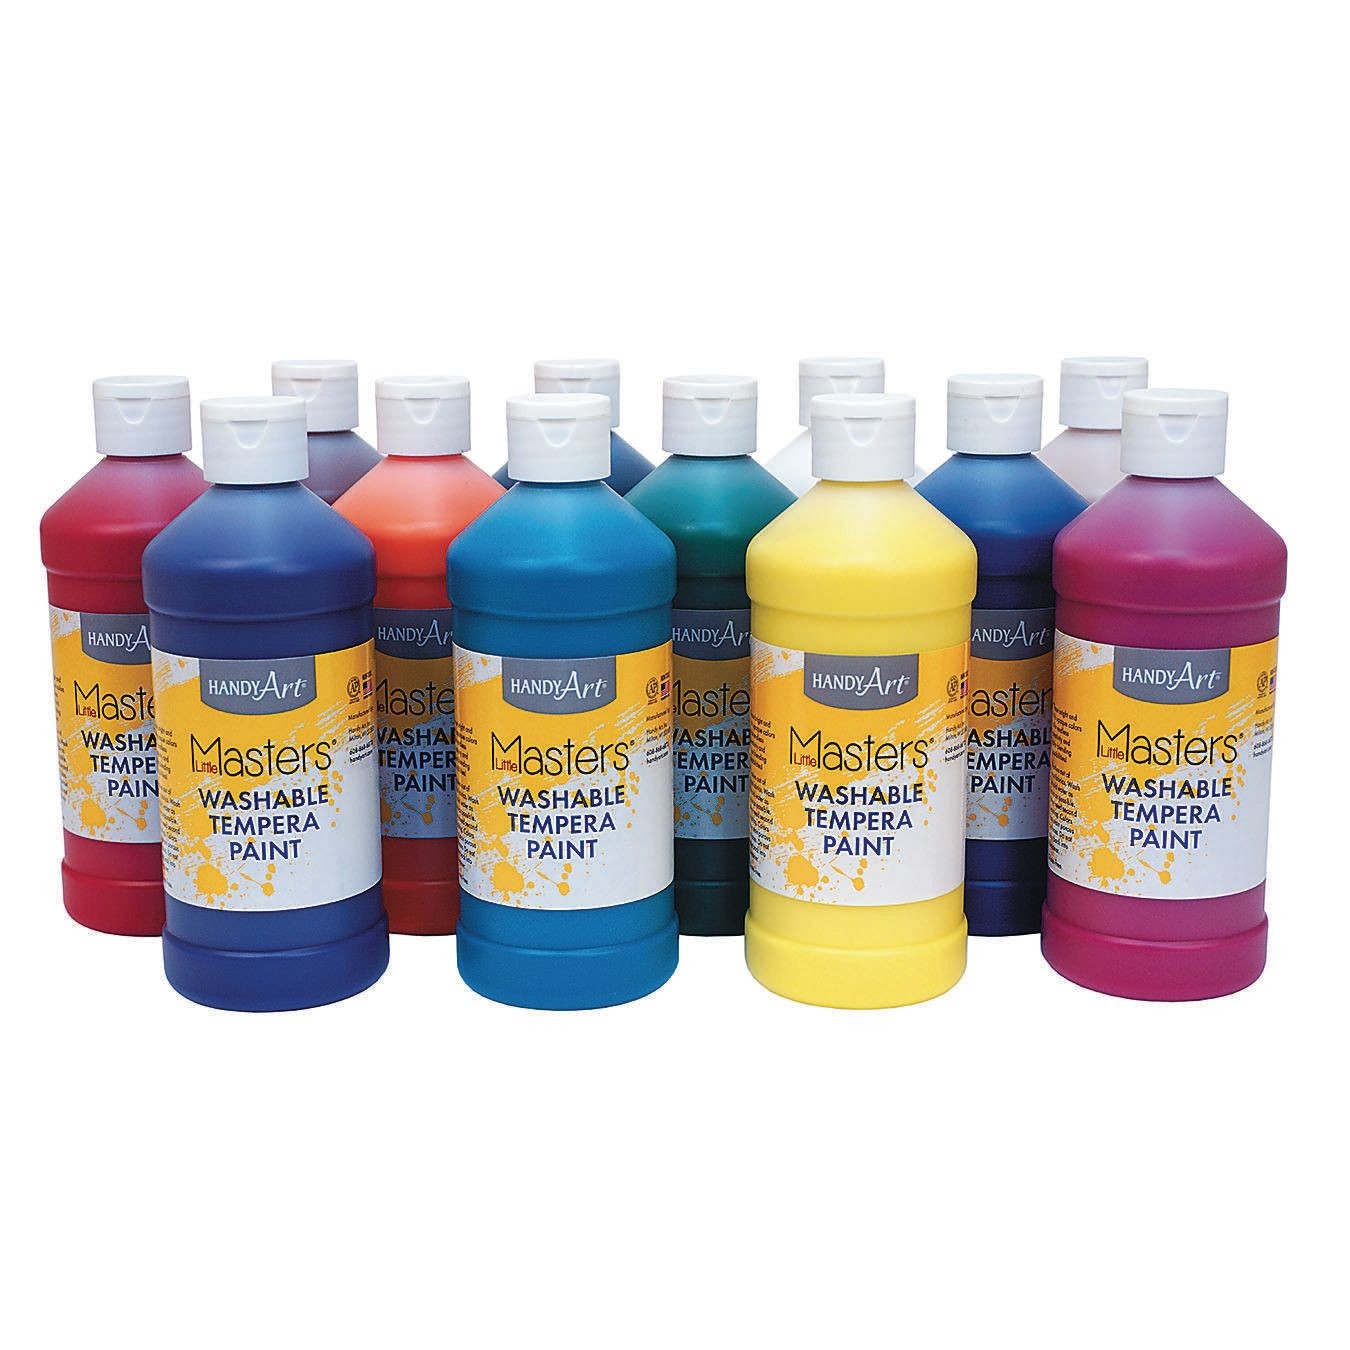 Handy Art Little Masters Washable Tempera Paint Kit 4 Gallons